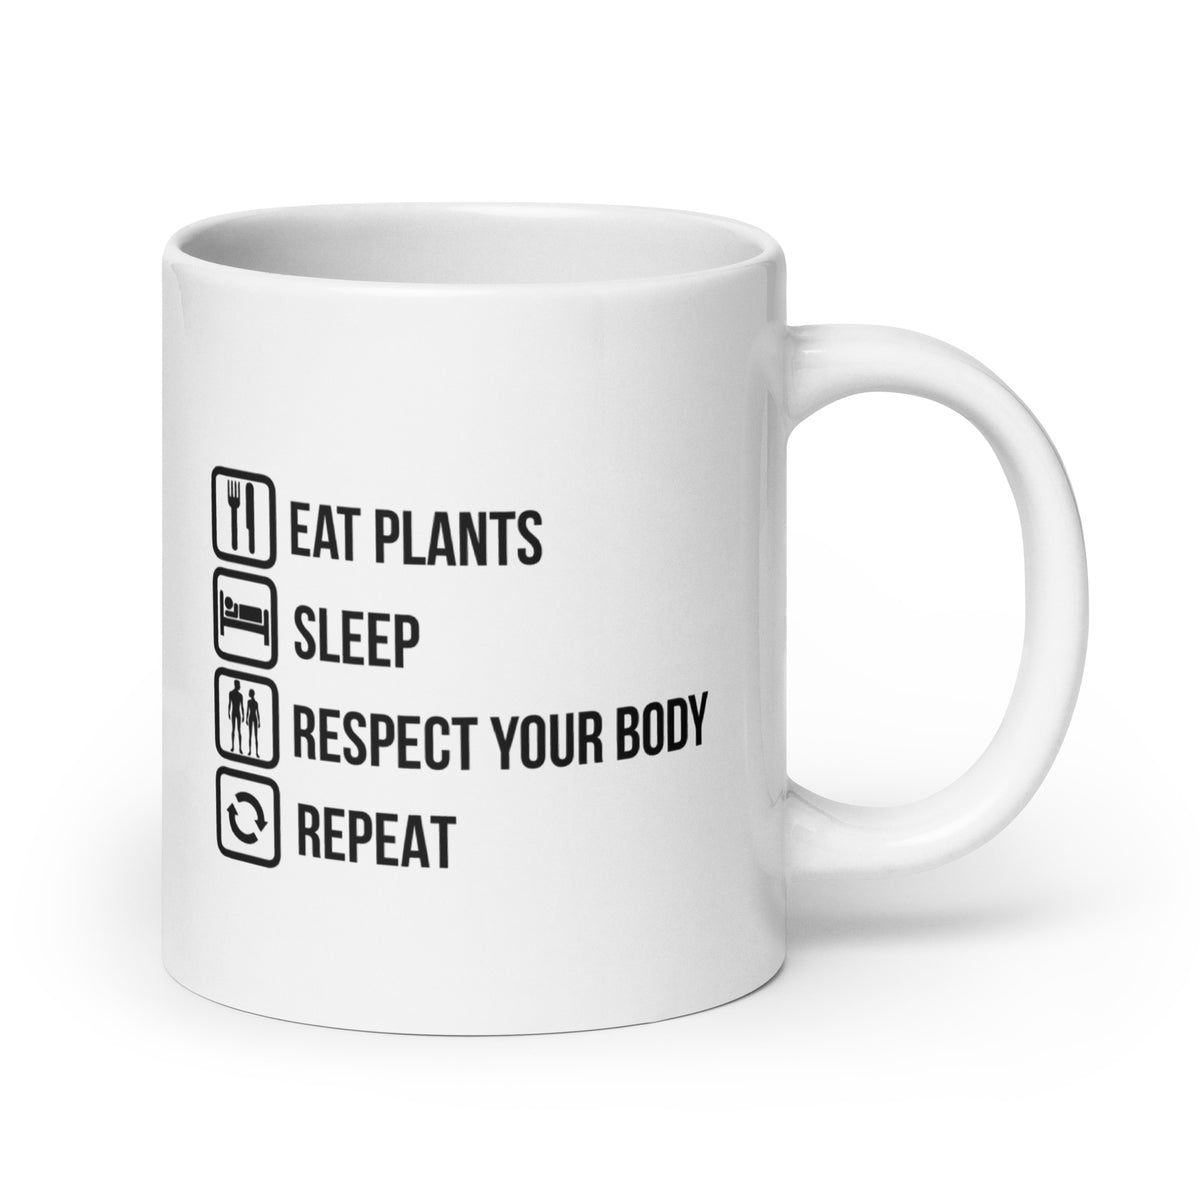 EAT PLANTS SLEEP RESPECT BODY White glossy mug